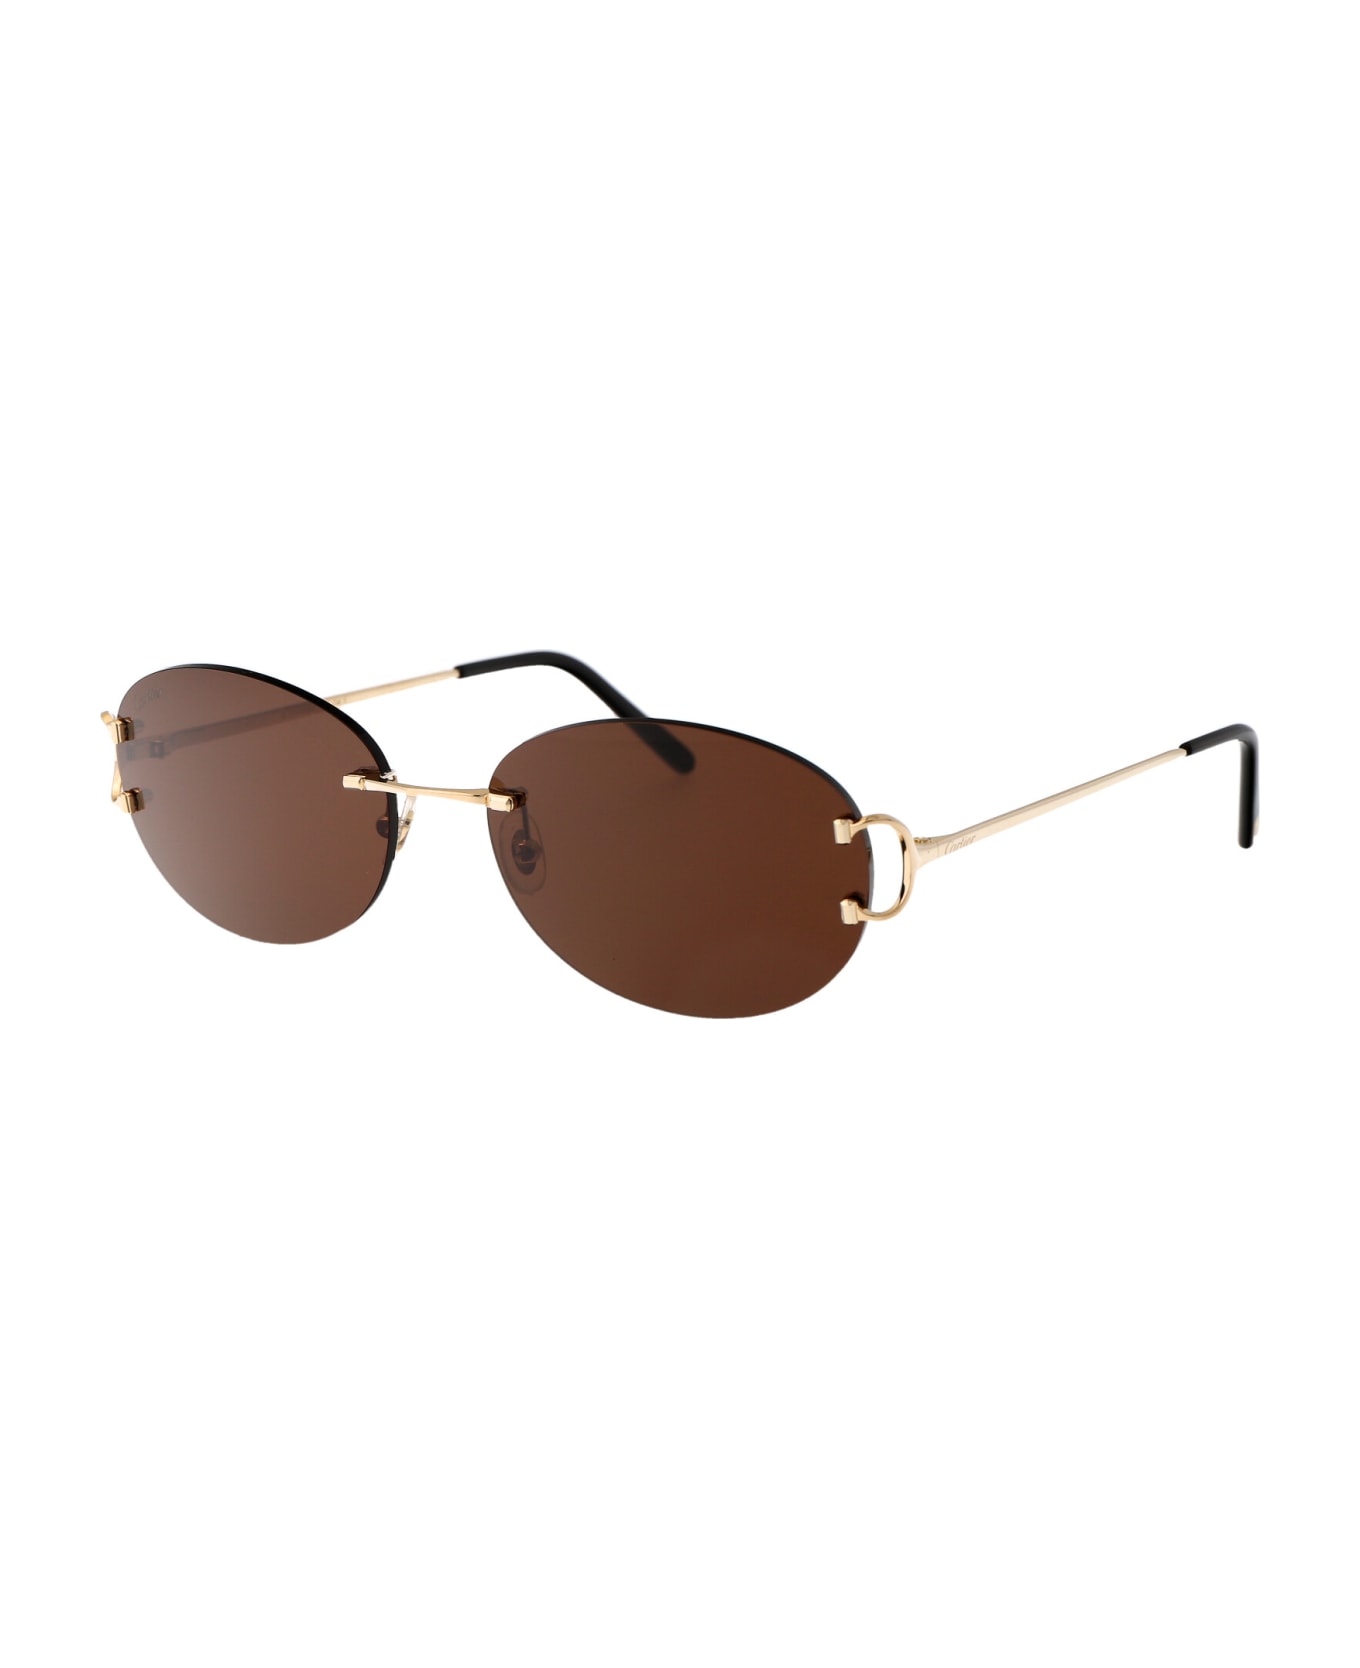 Cartier Eyewear Ct0029rs Sunglasses - 002 GOLD GOLD BROWN